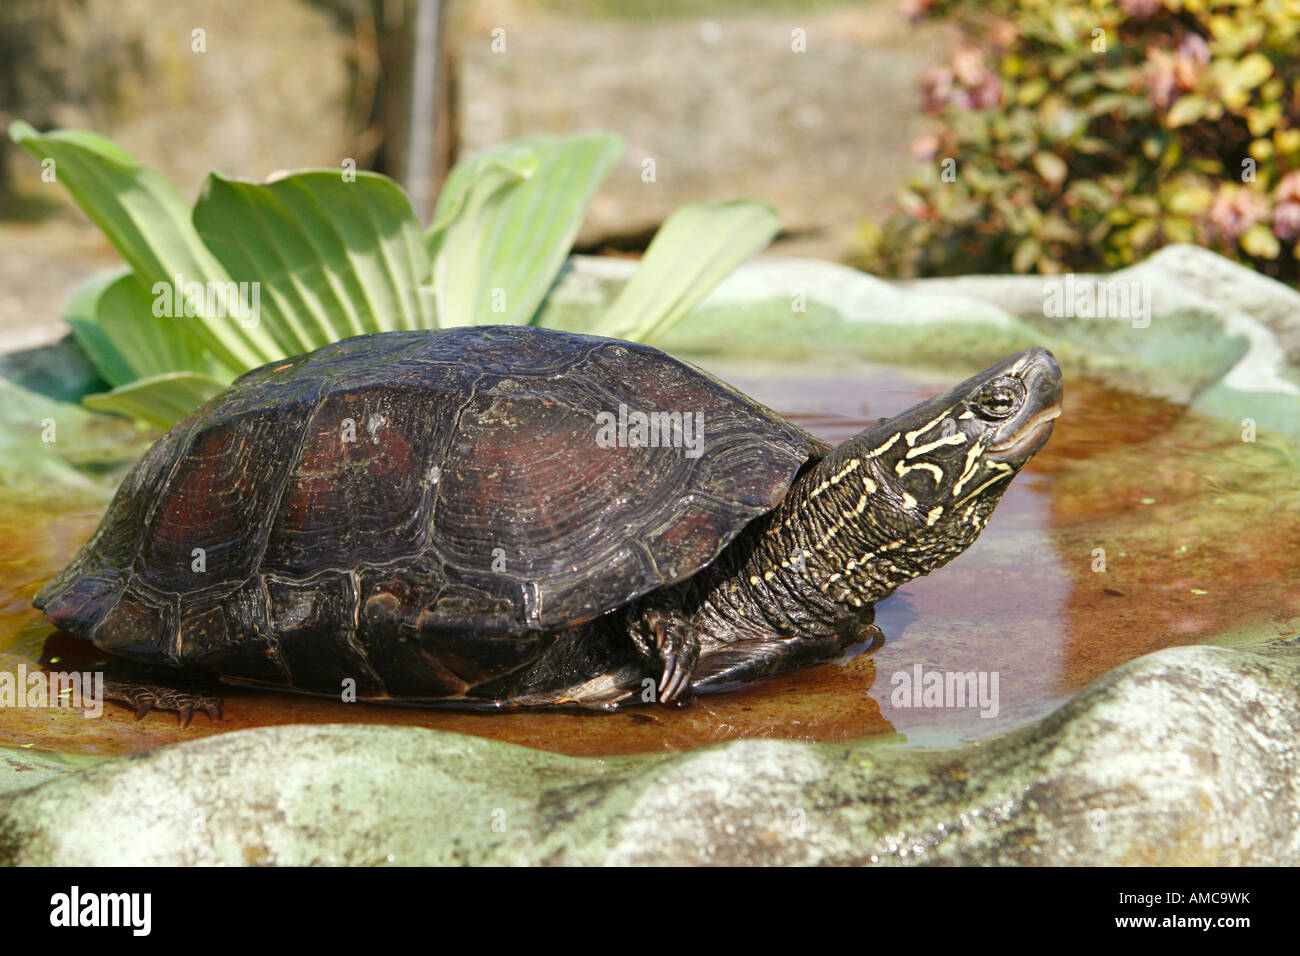 Chinese Three-keeled Pond Turtle / Chinemys revesii Stock Photo